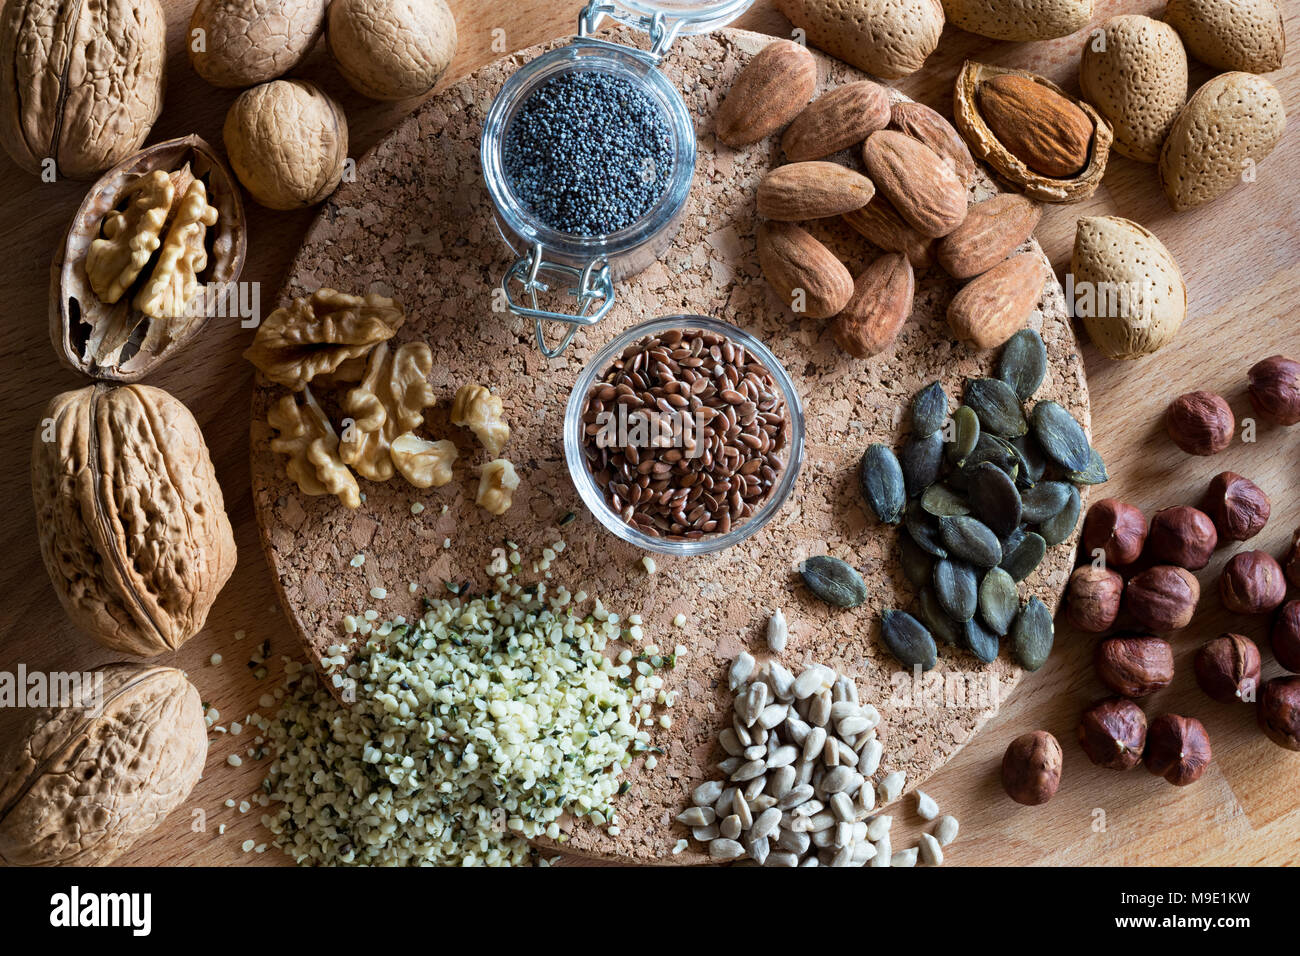 Nuts and seeds - walnuts, almonds, flax seeds, hazelnuts, hemp, pumpkin and sunflower seeds. Top view. Stock Photo